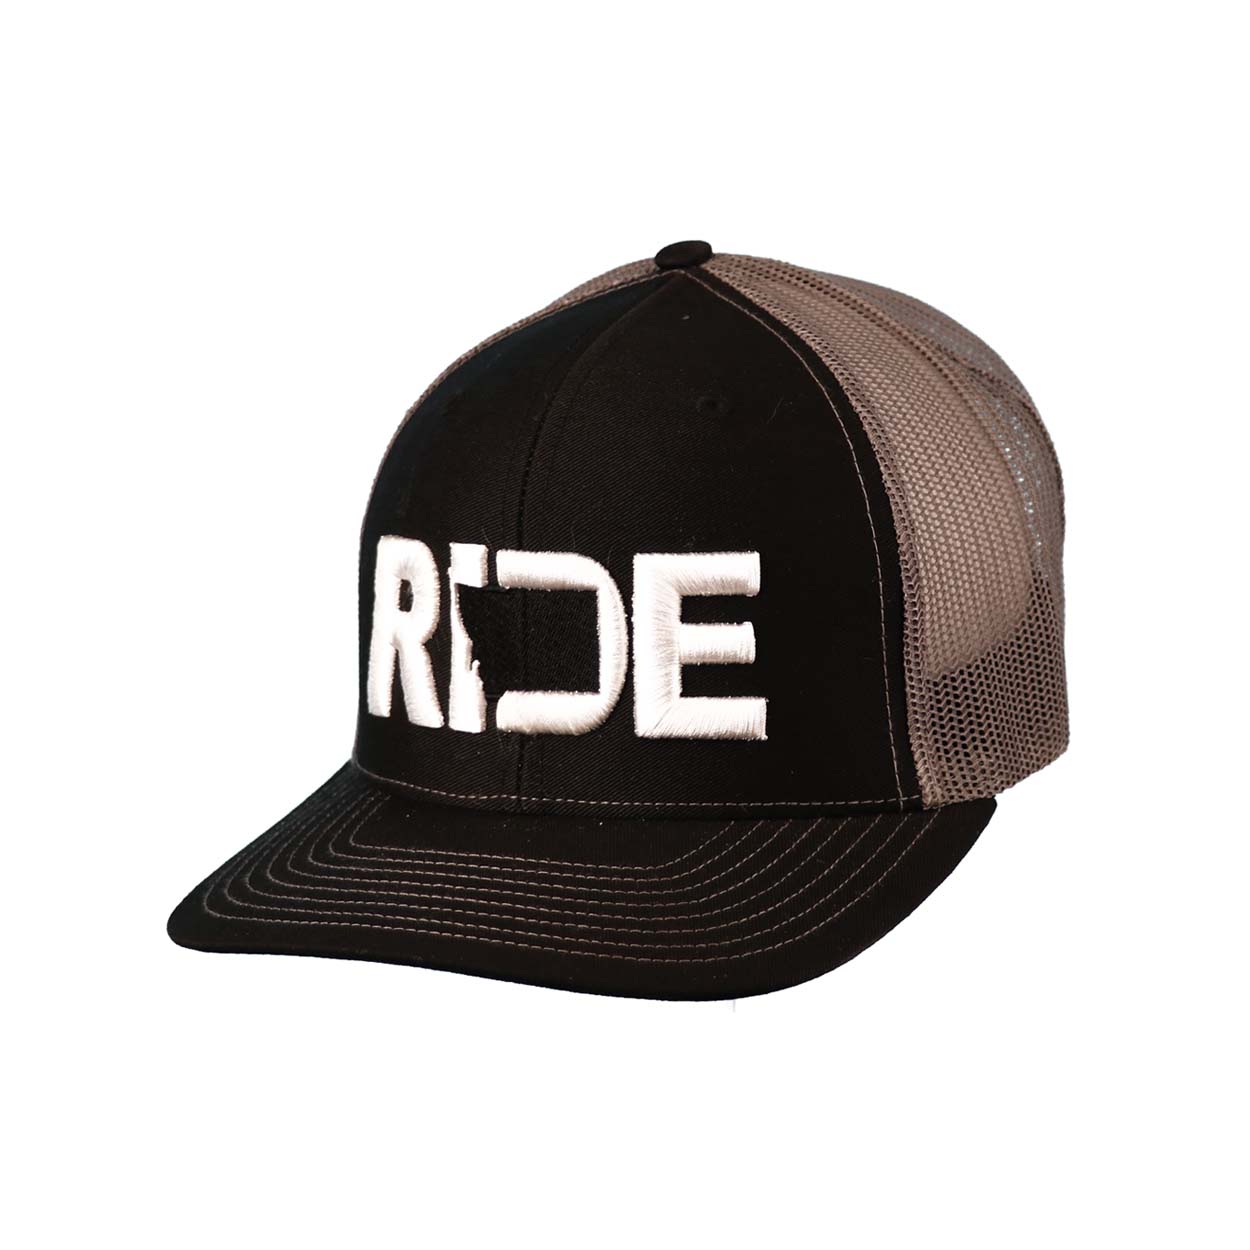 Ride Montana Classic Embroidered Snapback Trucker Hat Black/Dark Gray